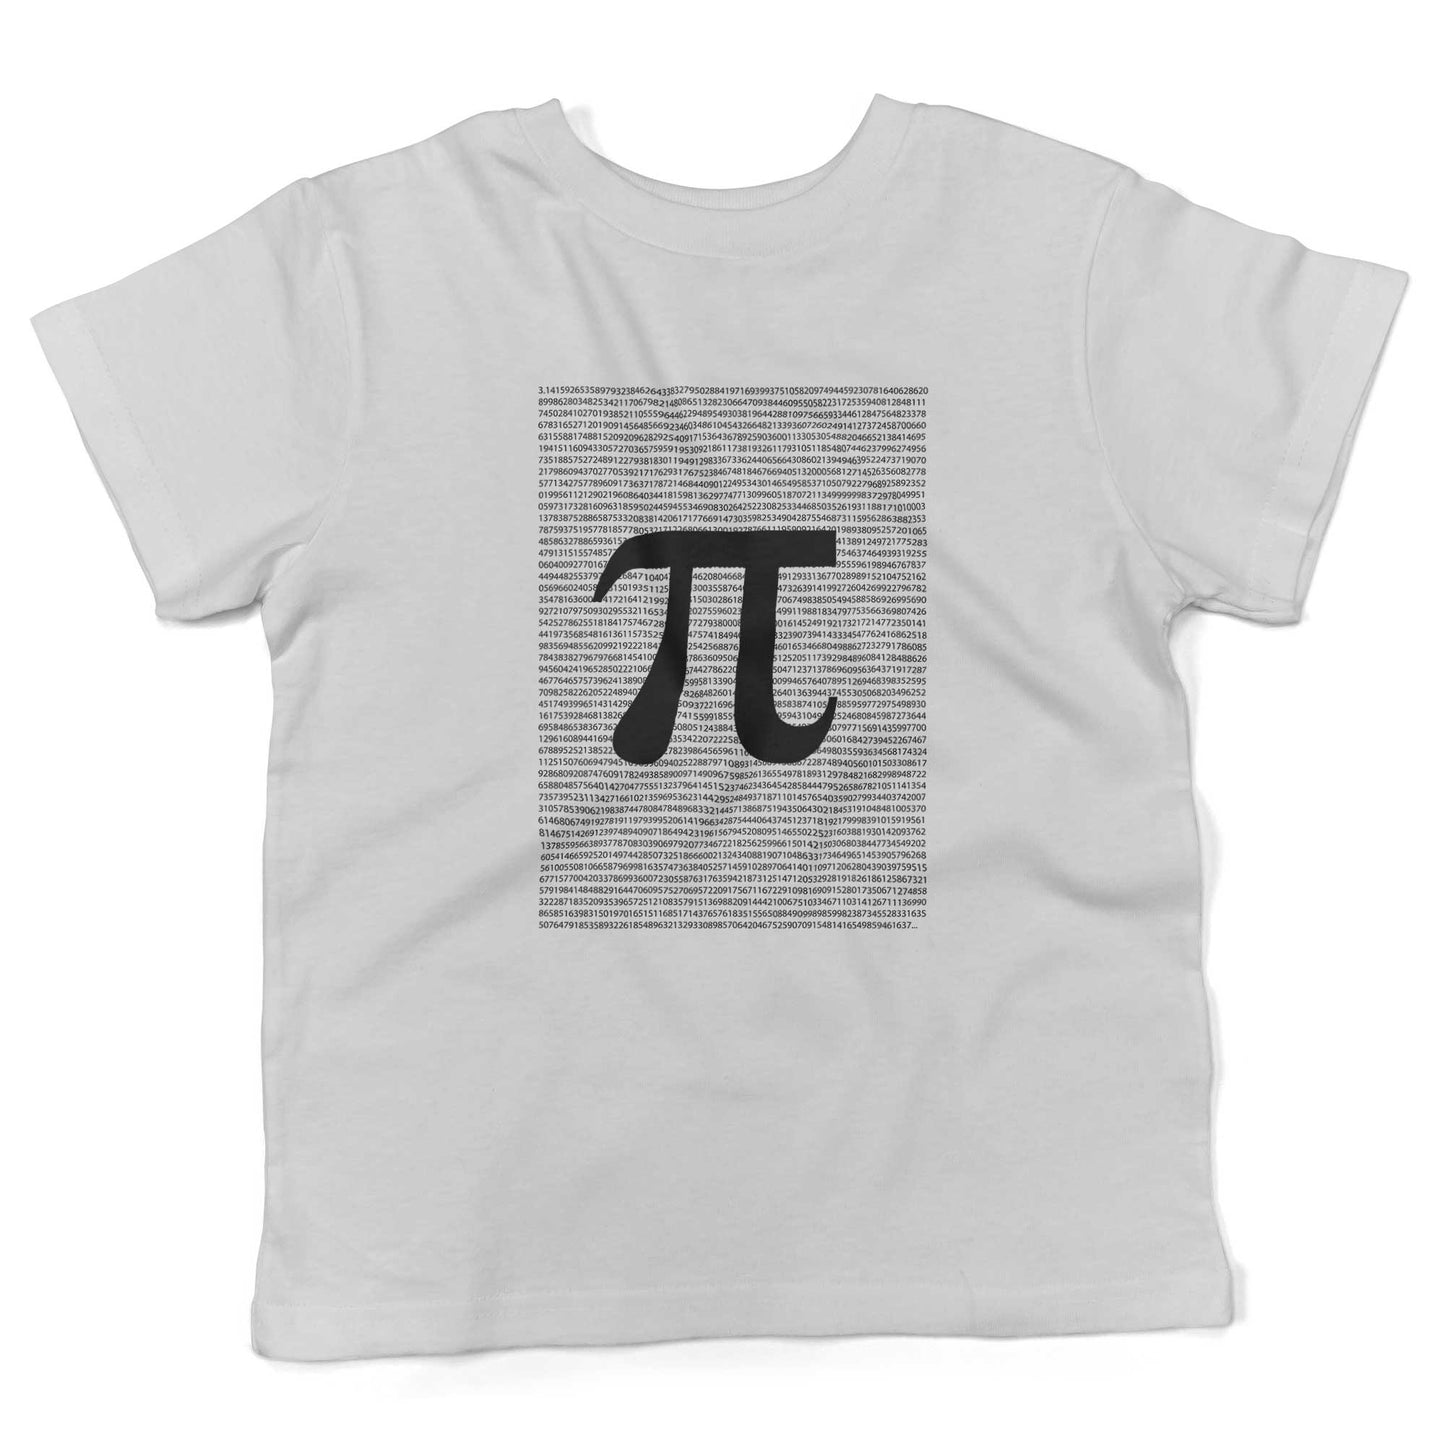 Irrational Pi Toddler Shirt-White-2T